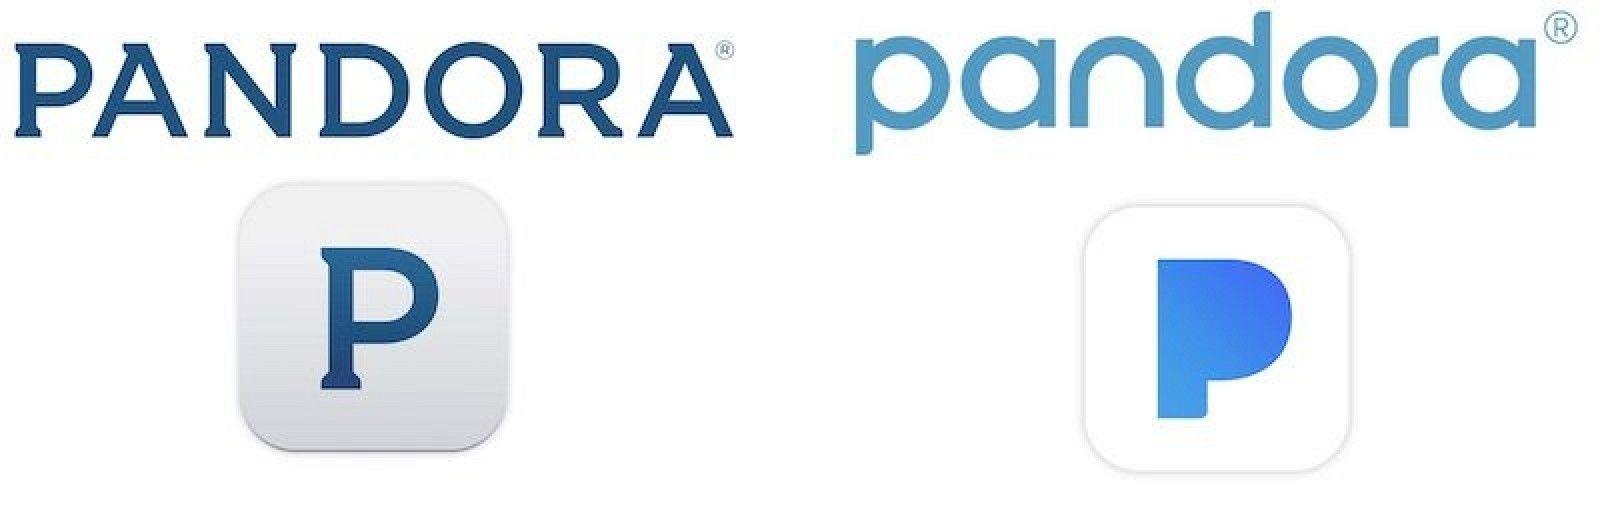 New Pandora Logo - Pandora Rebrands Mobile App Ahead of On-Demand Music Service Launch ...